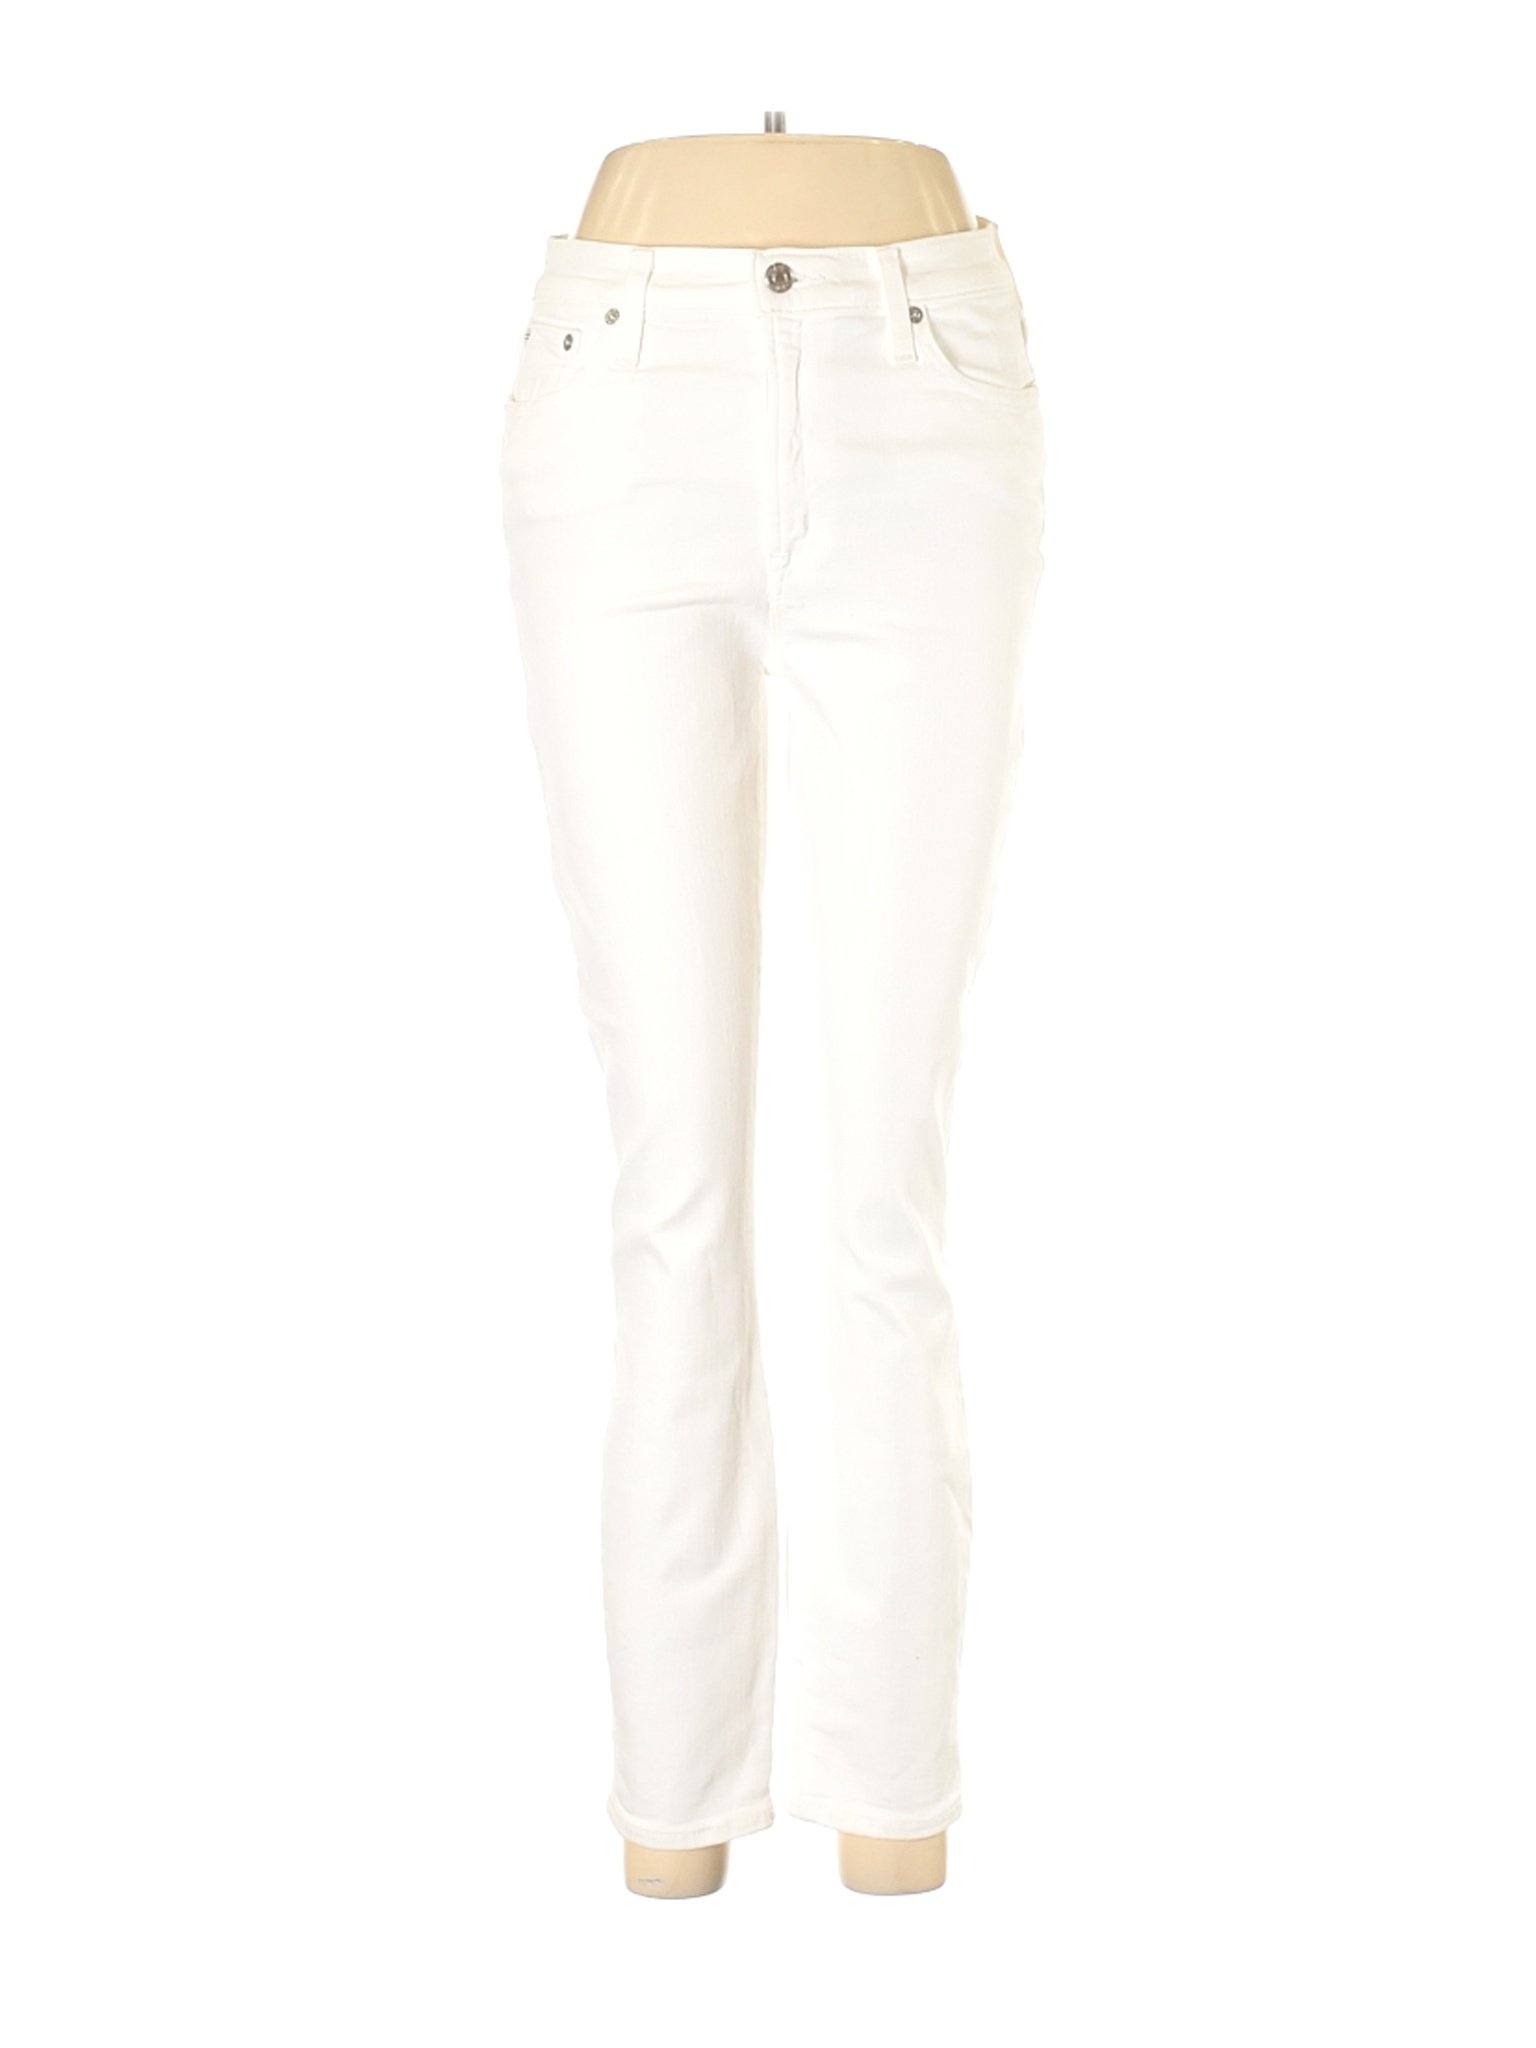 J.Crew Women White Jeans 28W | eBay